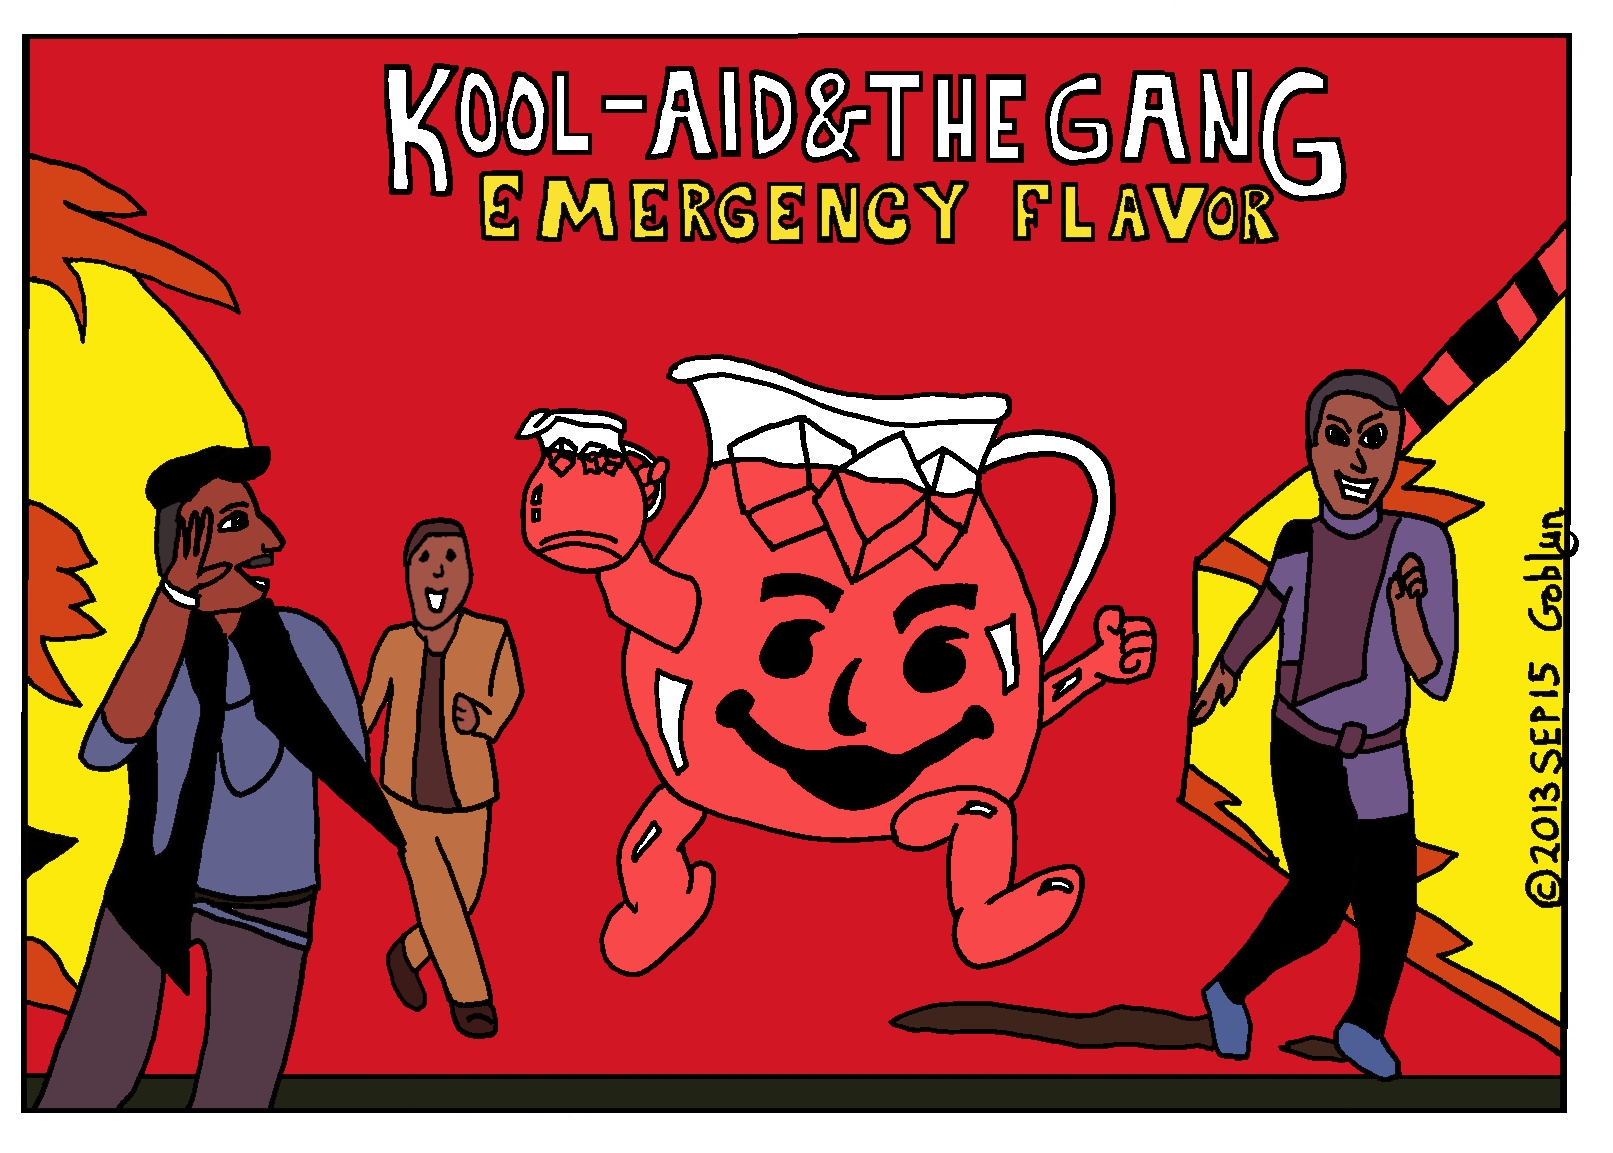 Kool-Aid and the Gang Emergency Flavor, Kool-Aid, Kool and the Gang